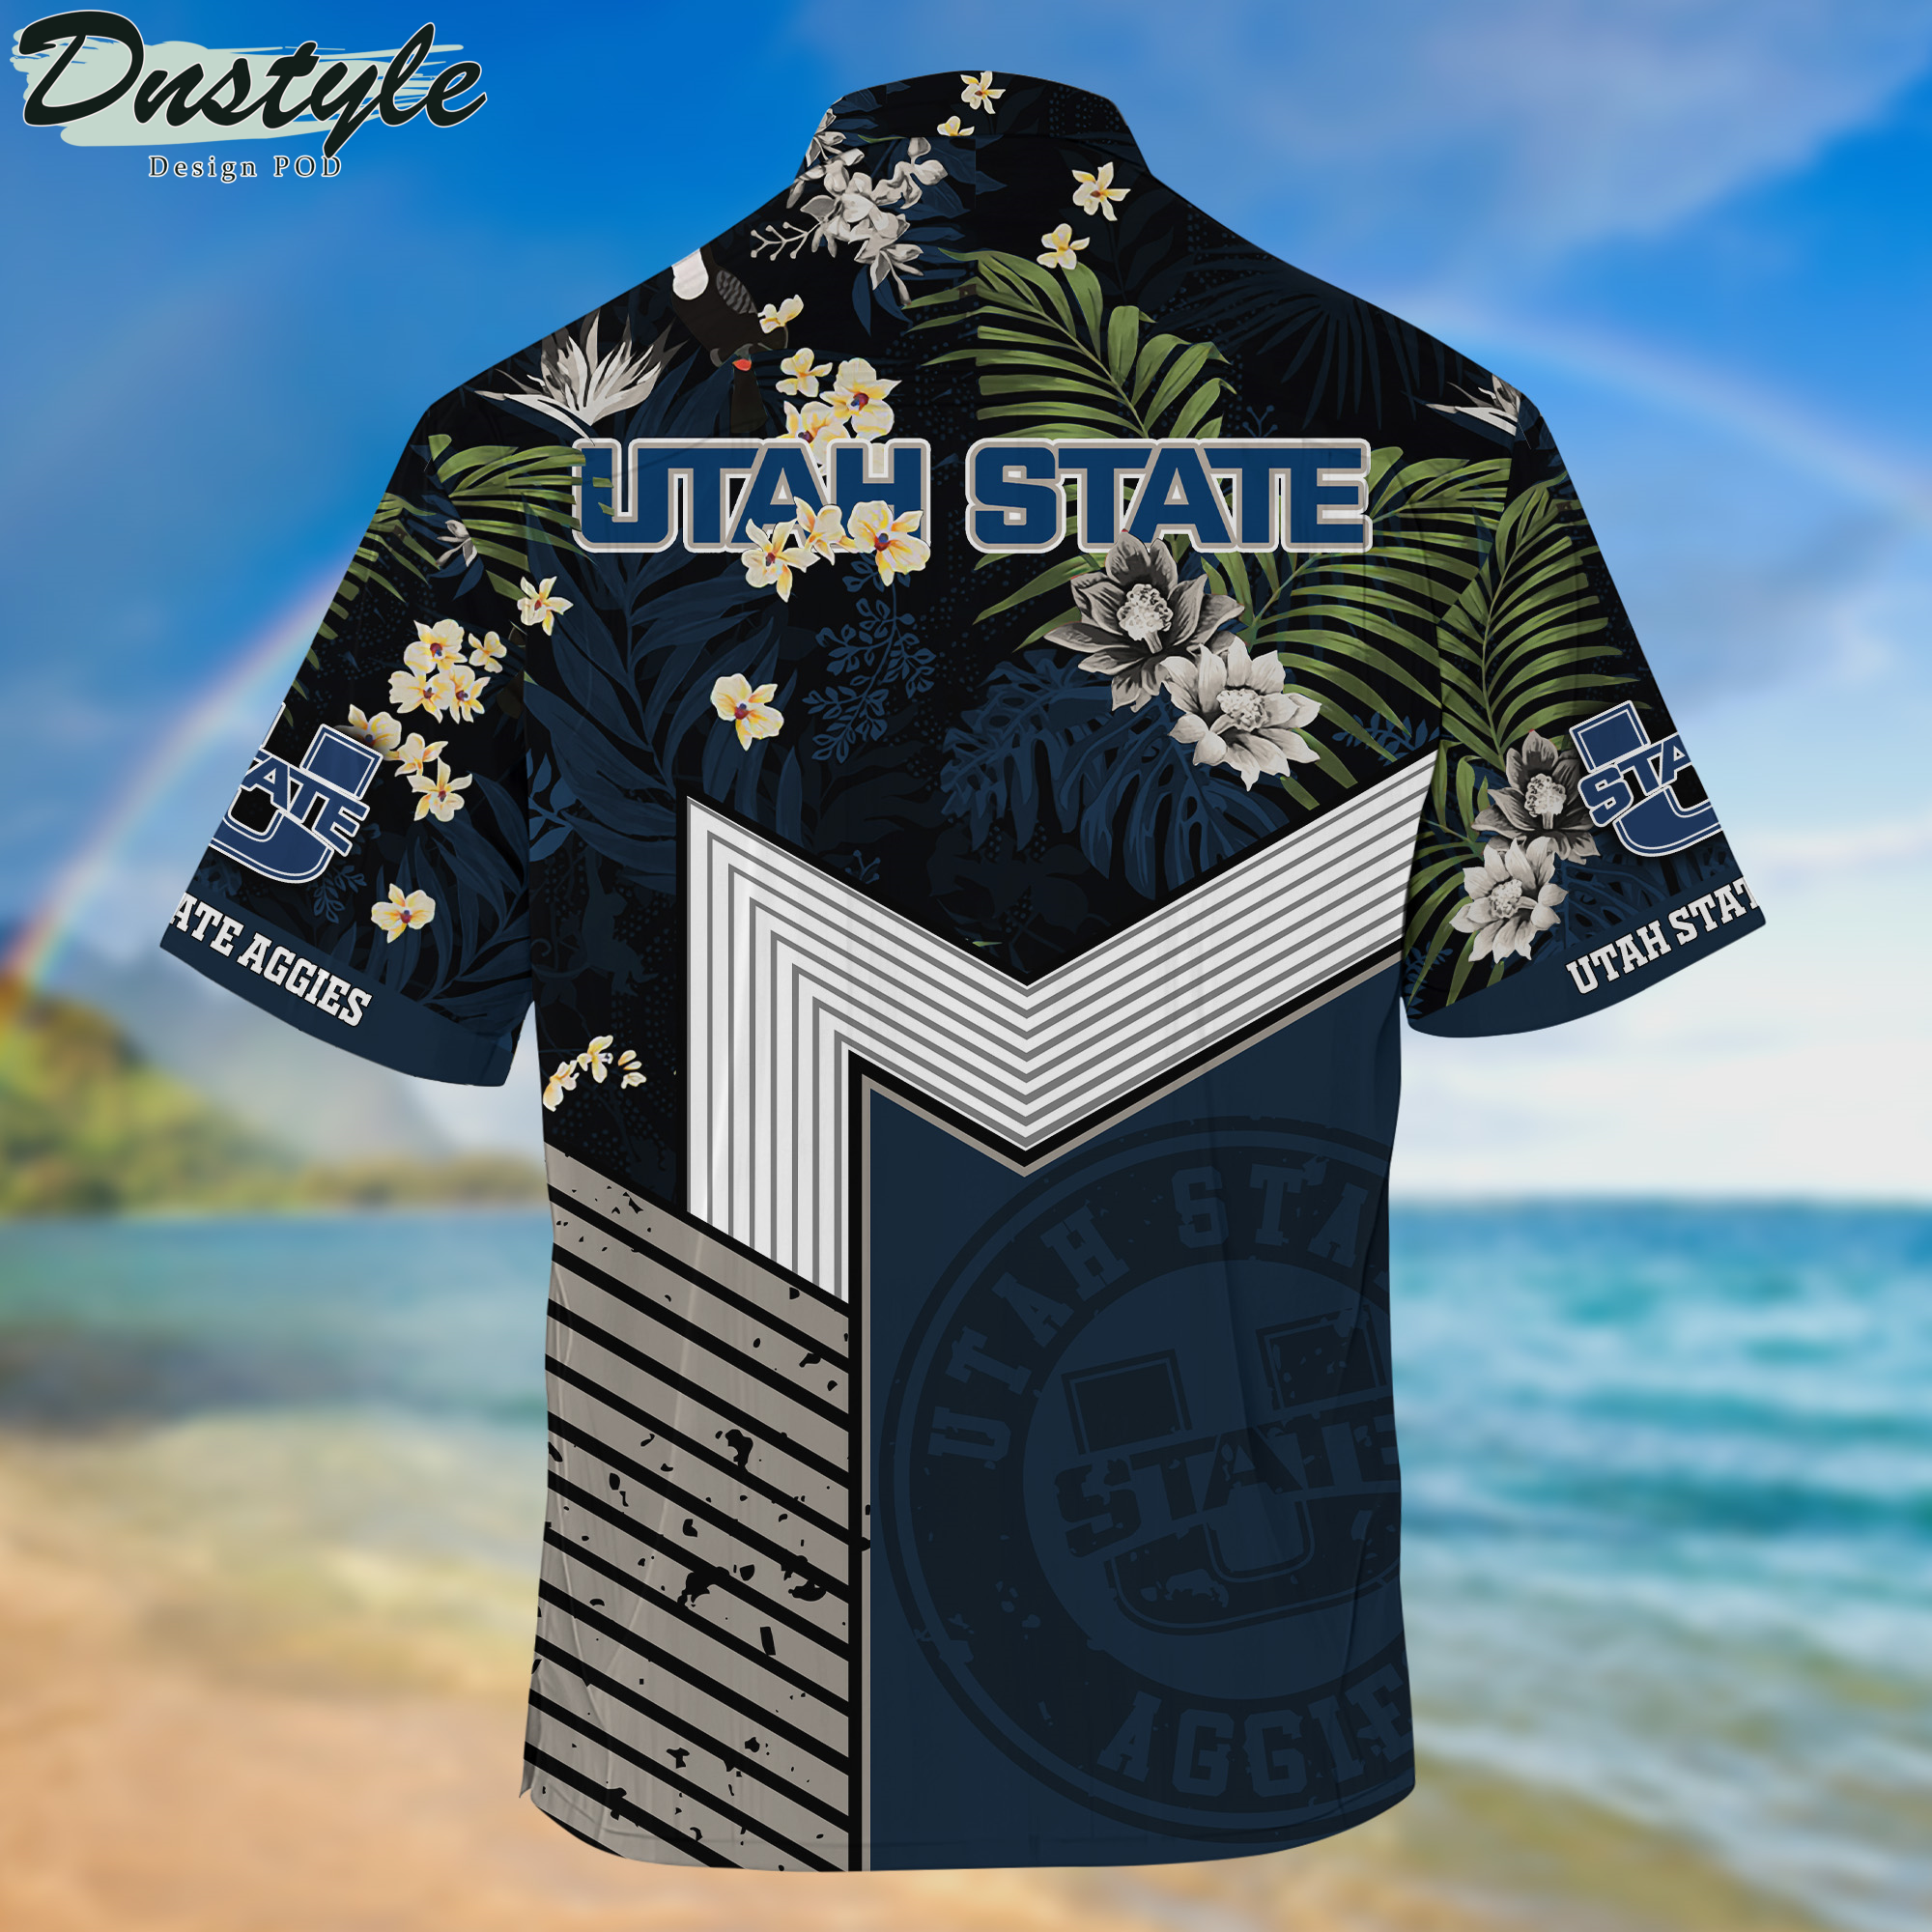 Utah State Aggies Hawaii Shirt And Shorts New Collection